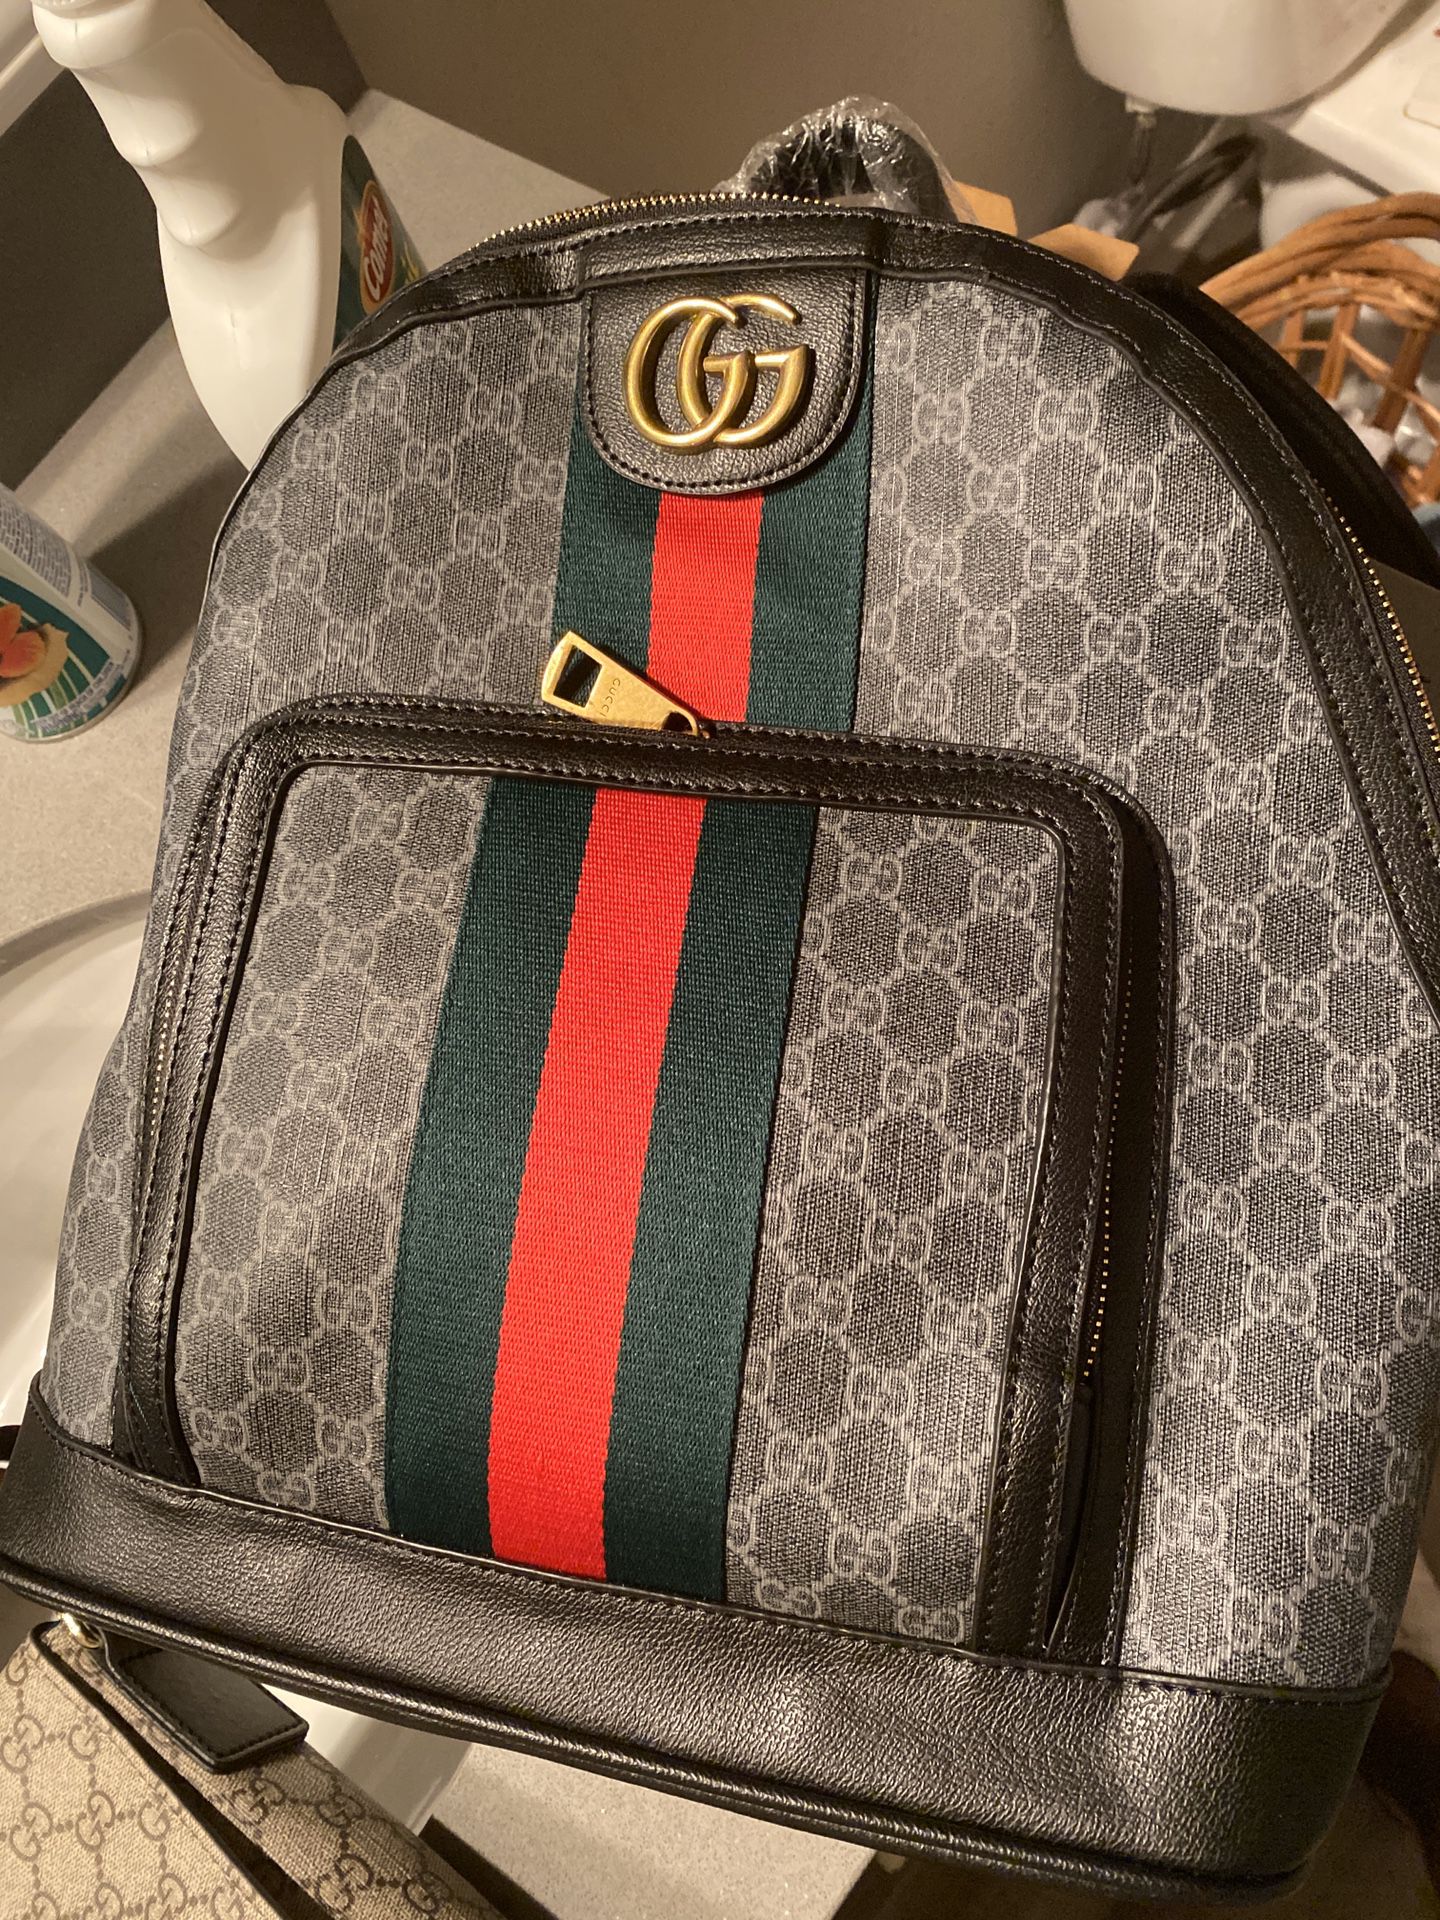 Luh Gucci book bag